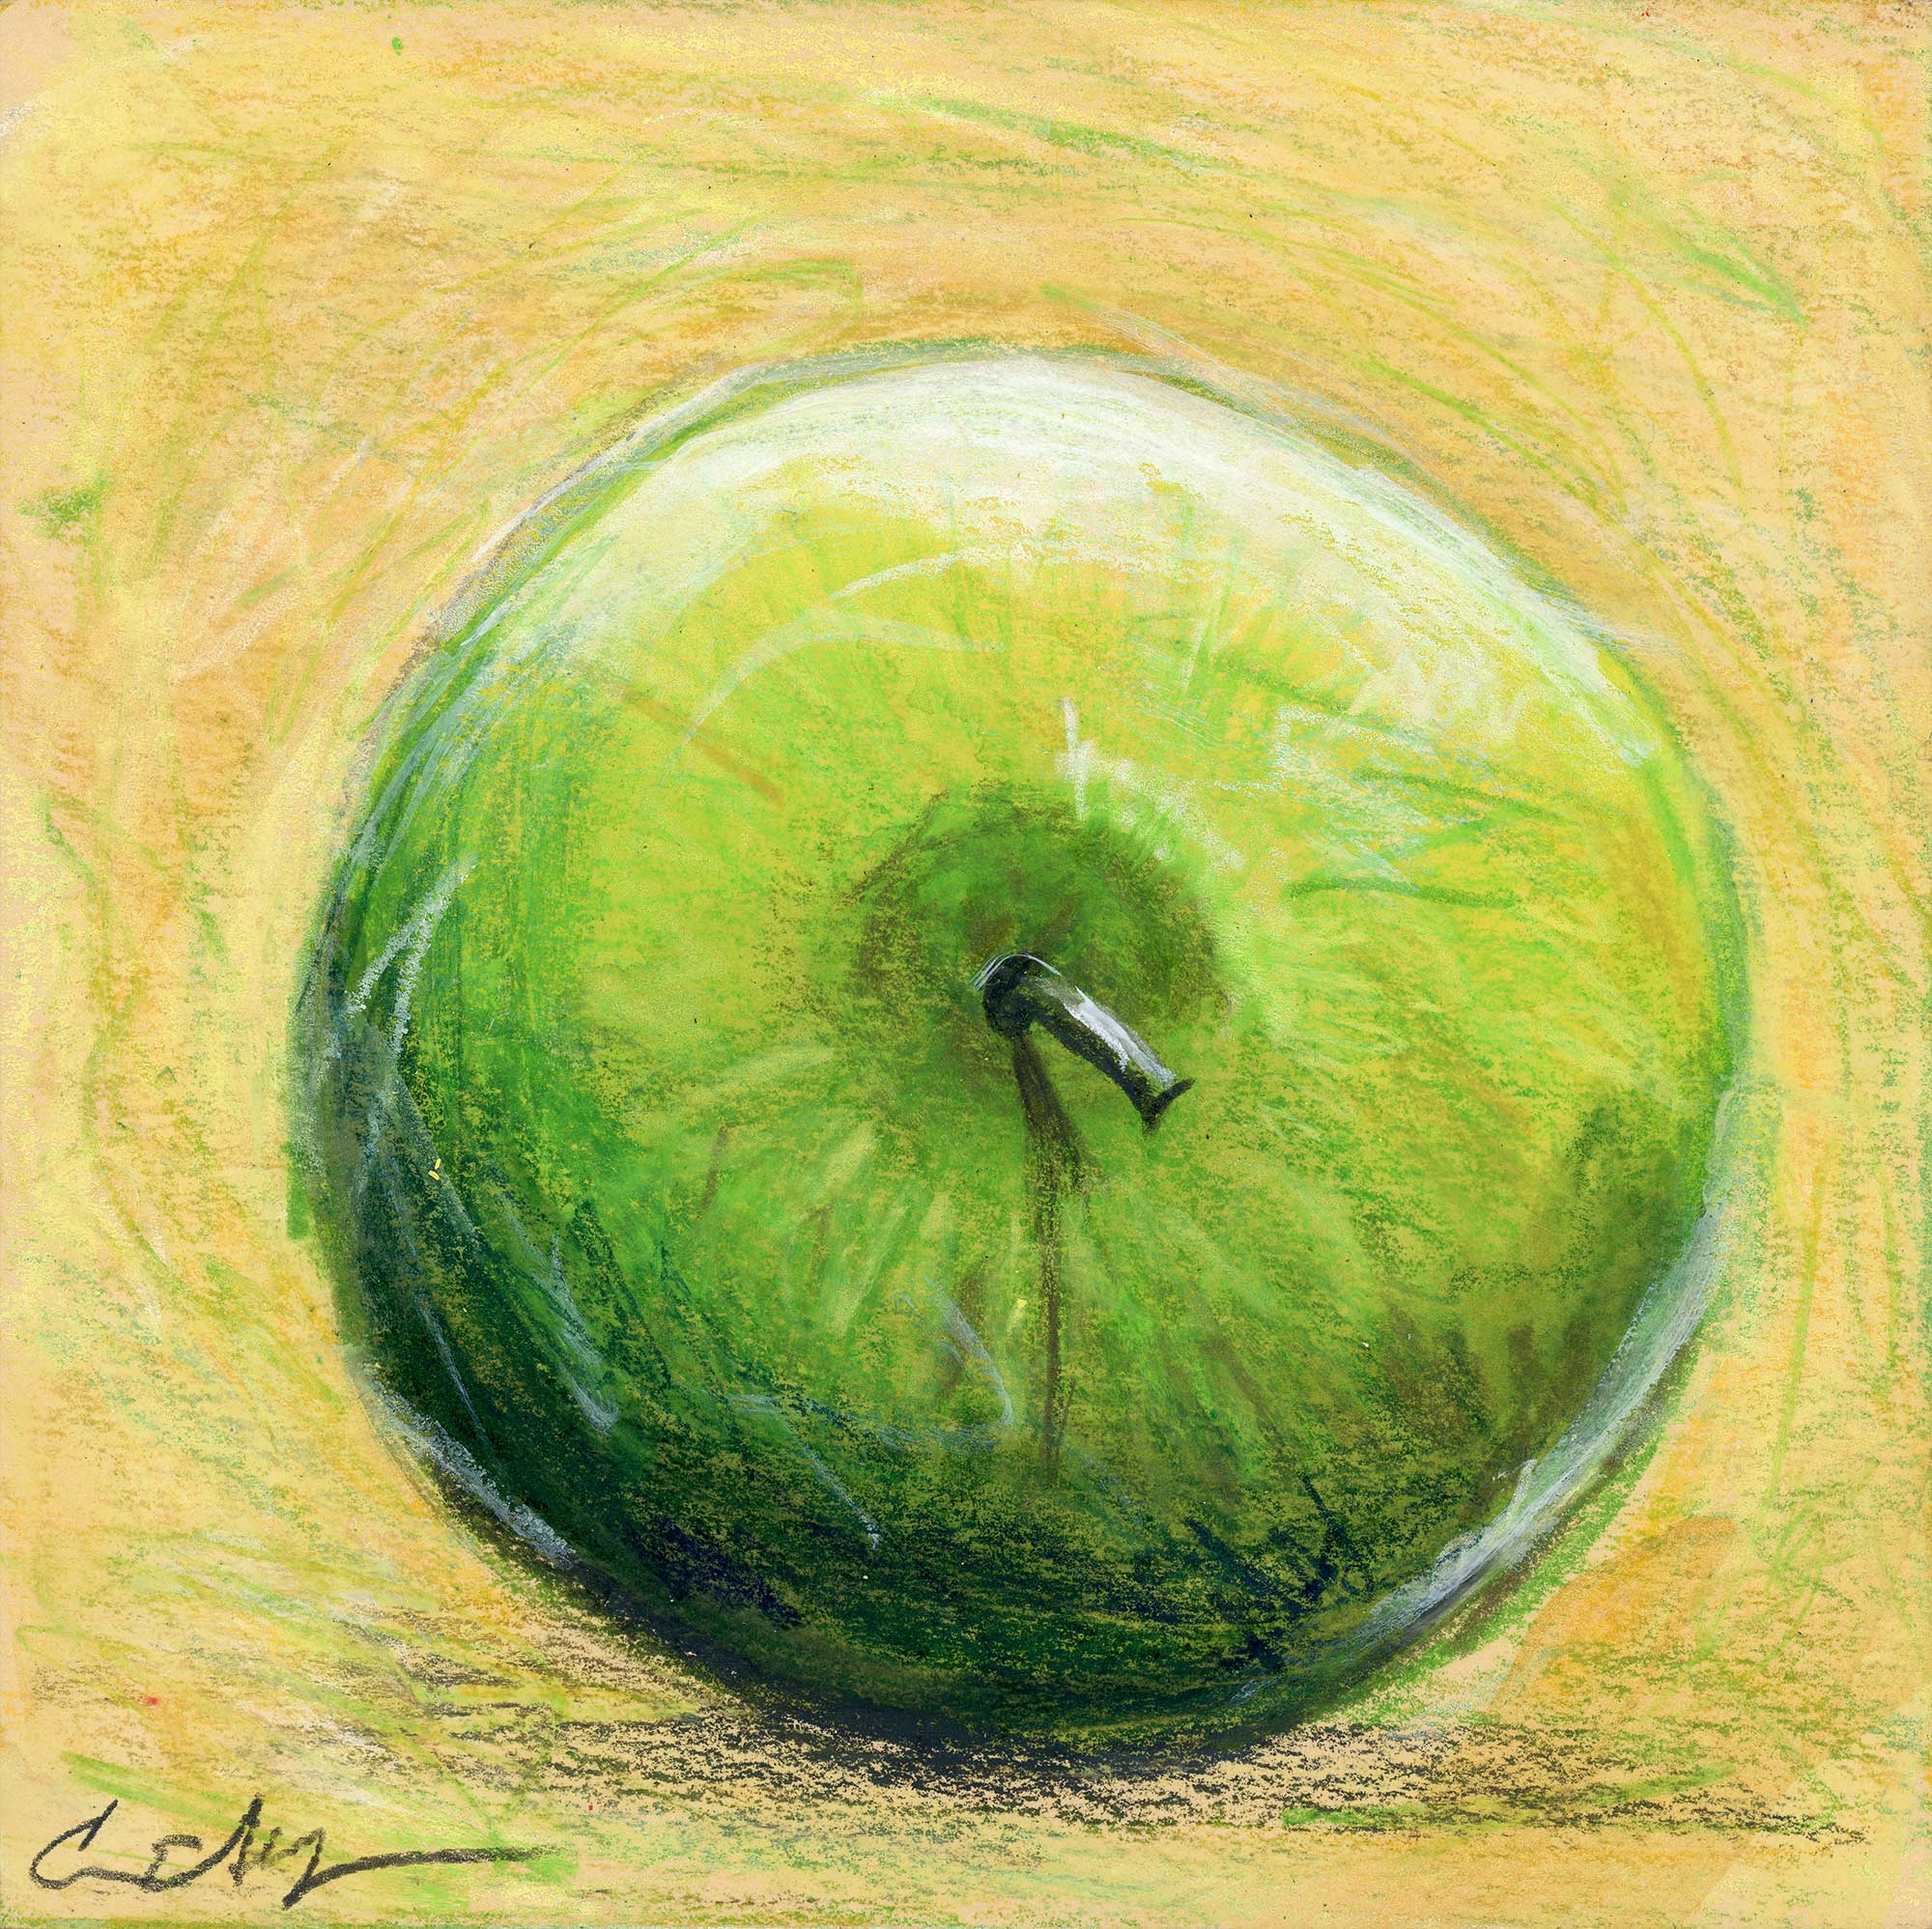 SOLD - "Green Apple", 6" x 6", mixed media